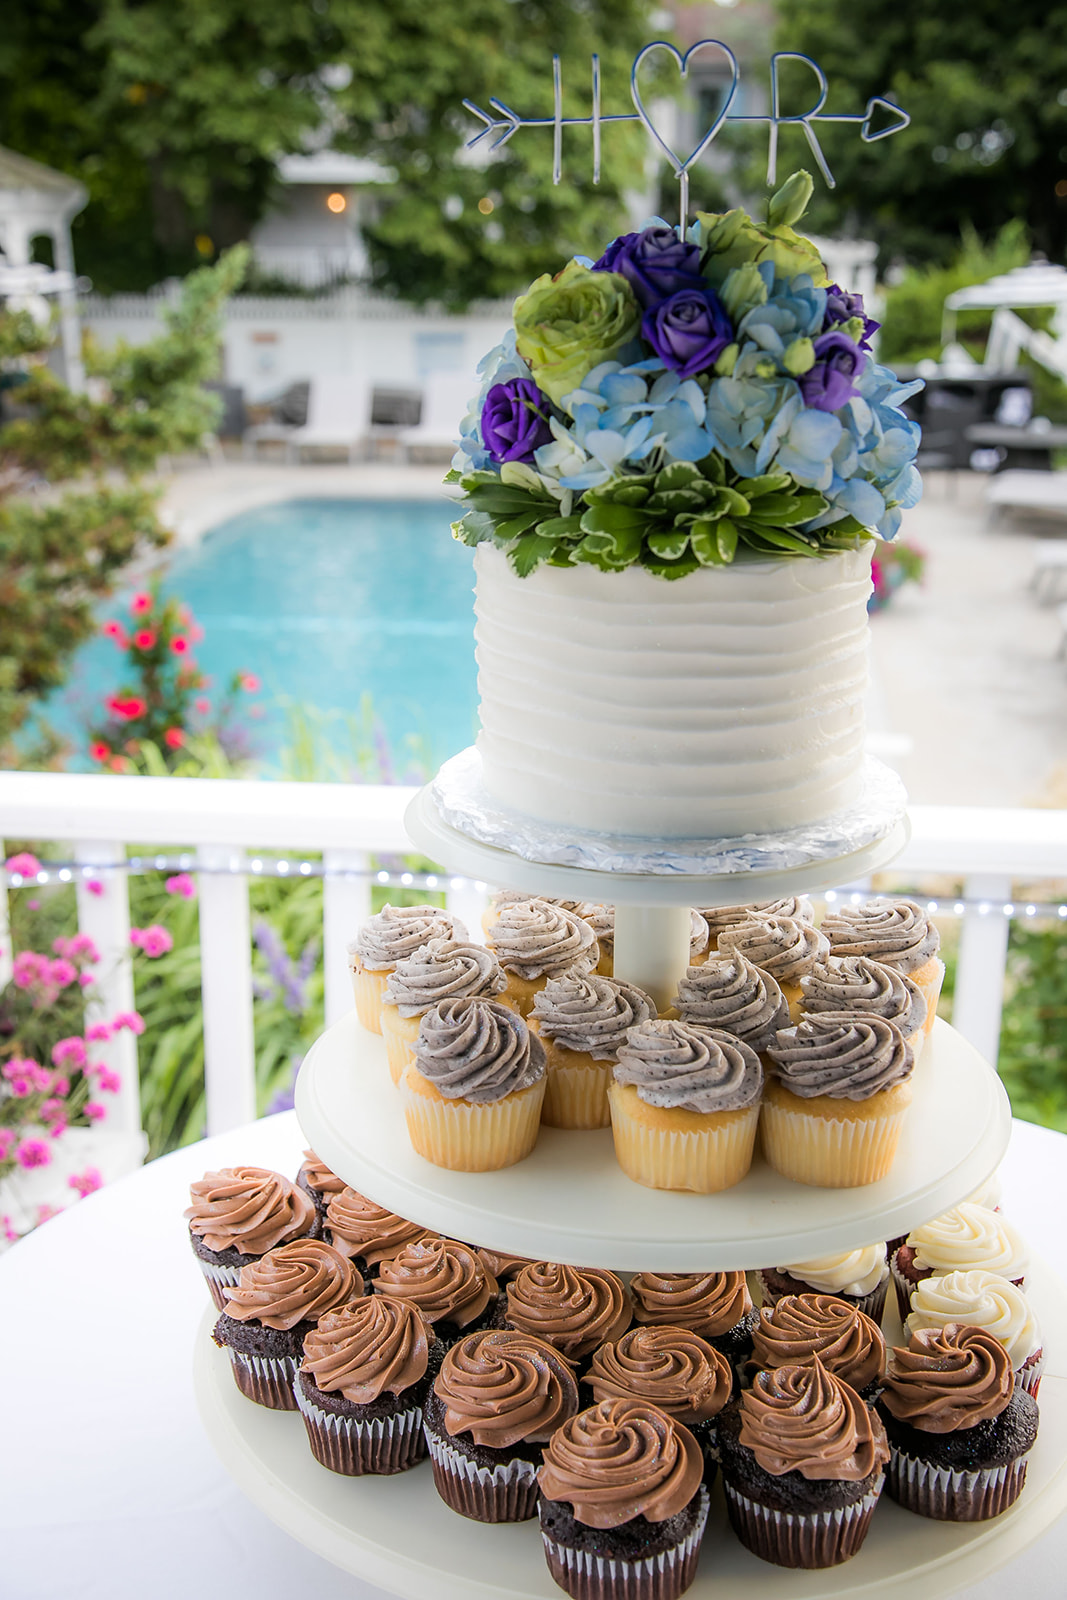 Wedding cake by pool